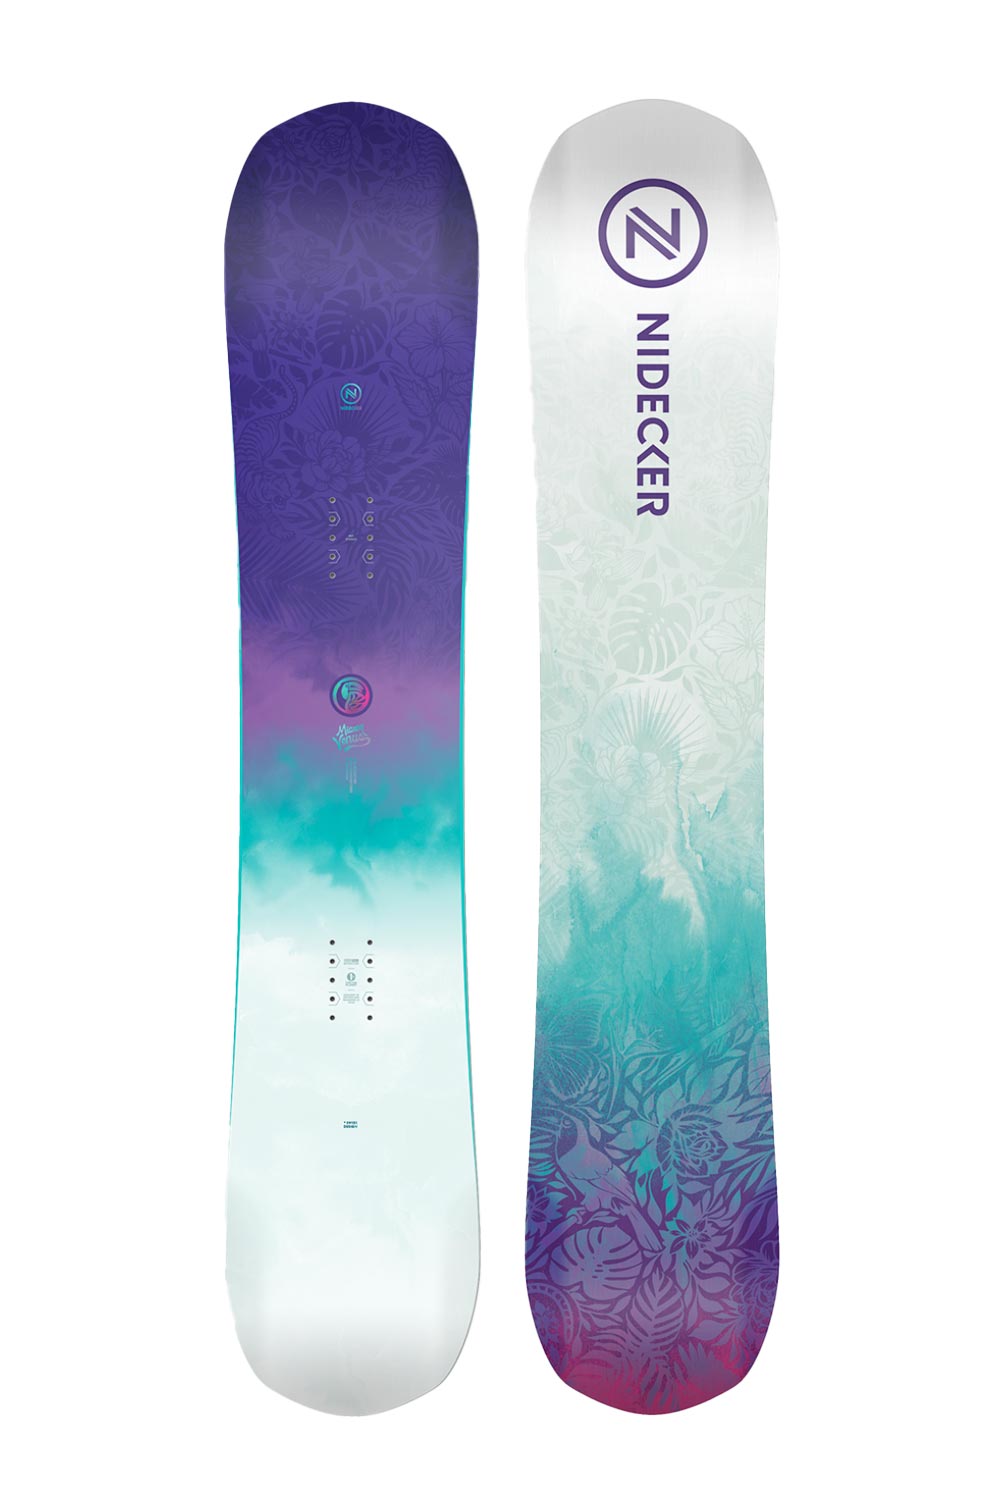 Nidecker Venus youth snowboard, white teal and purple